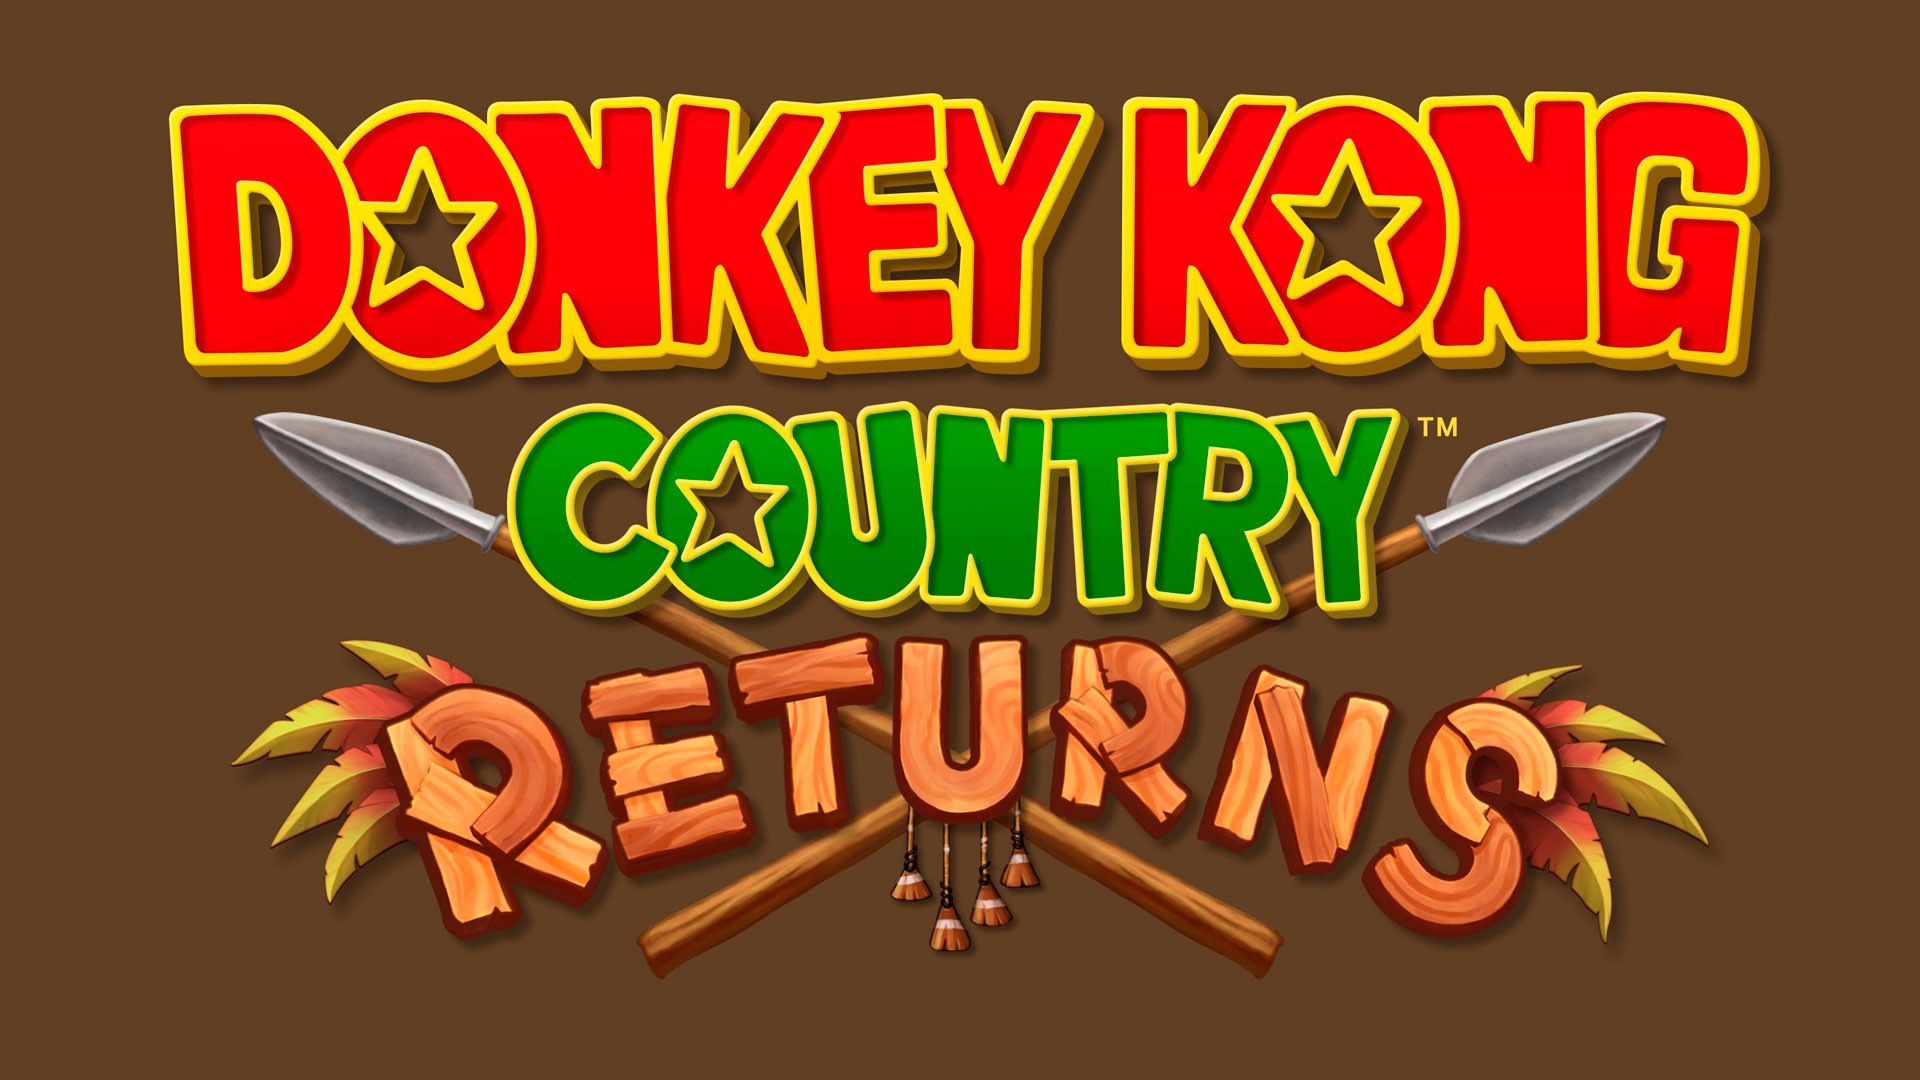 Donkey Kong Country Returns HD Wallpaper